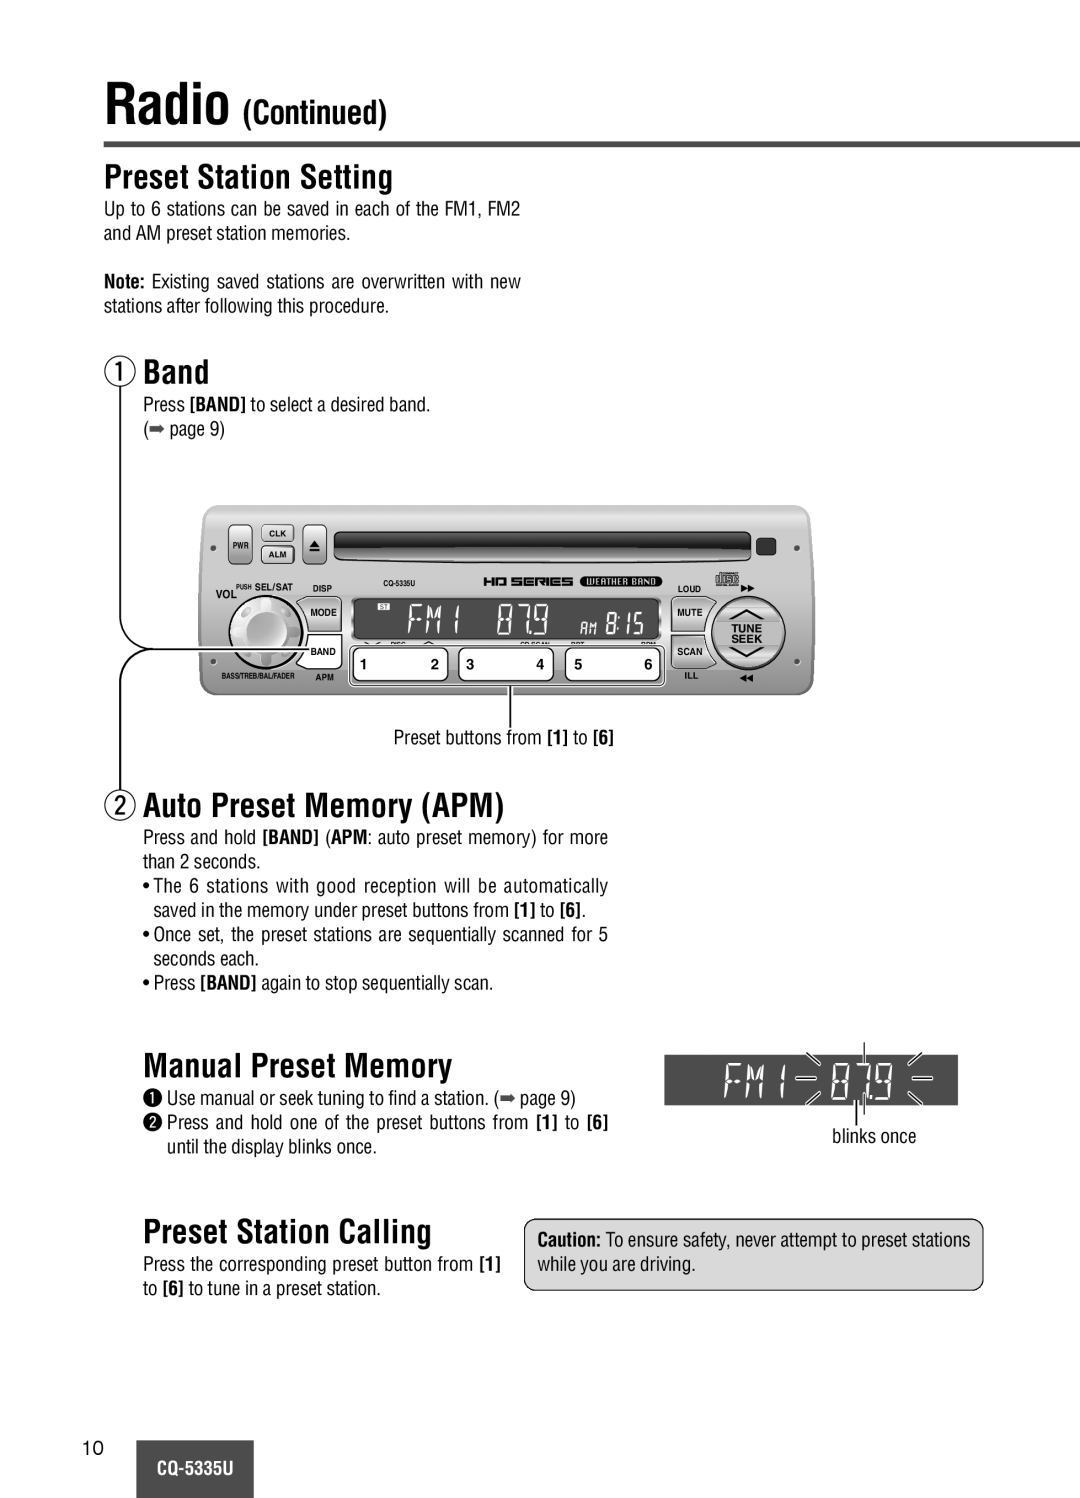 Panasonic CQ-5335U Radio Continued Preset Station Setting, q Band, w Auto Preset Memory APM, Manual Preset Memory 